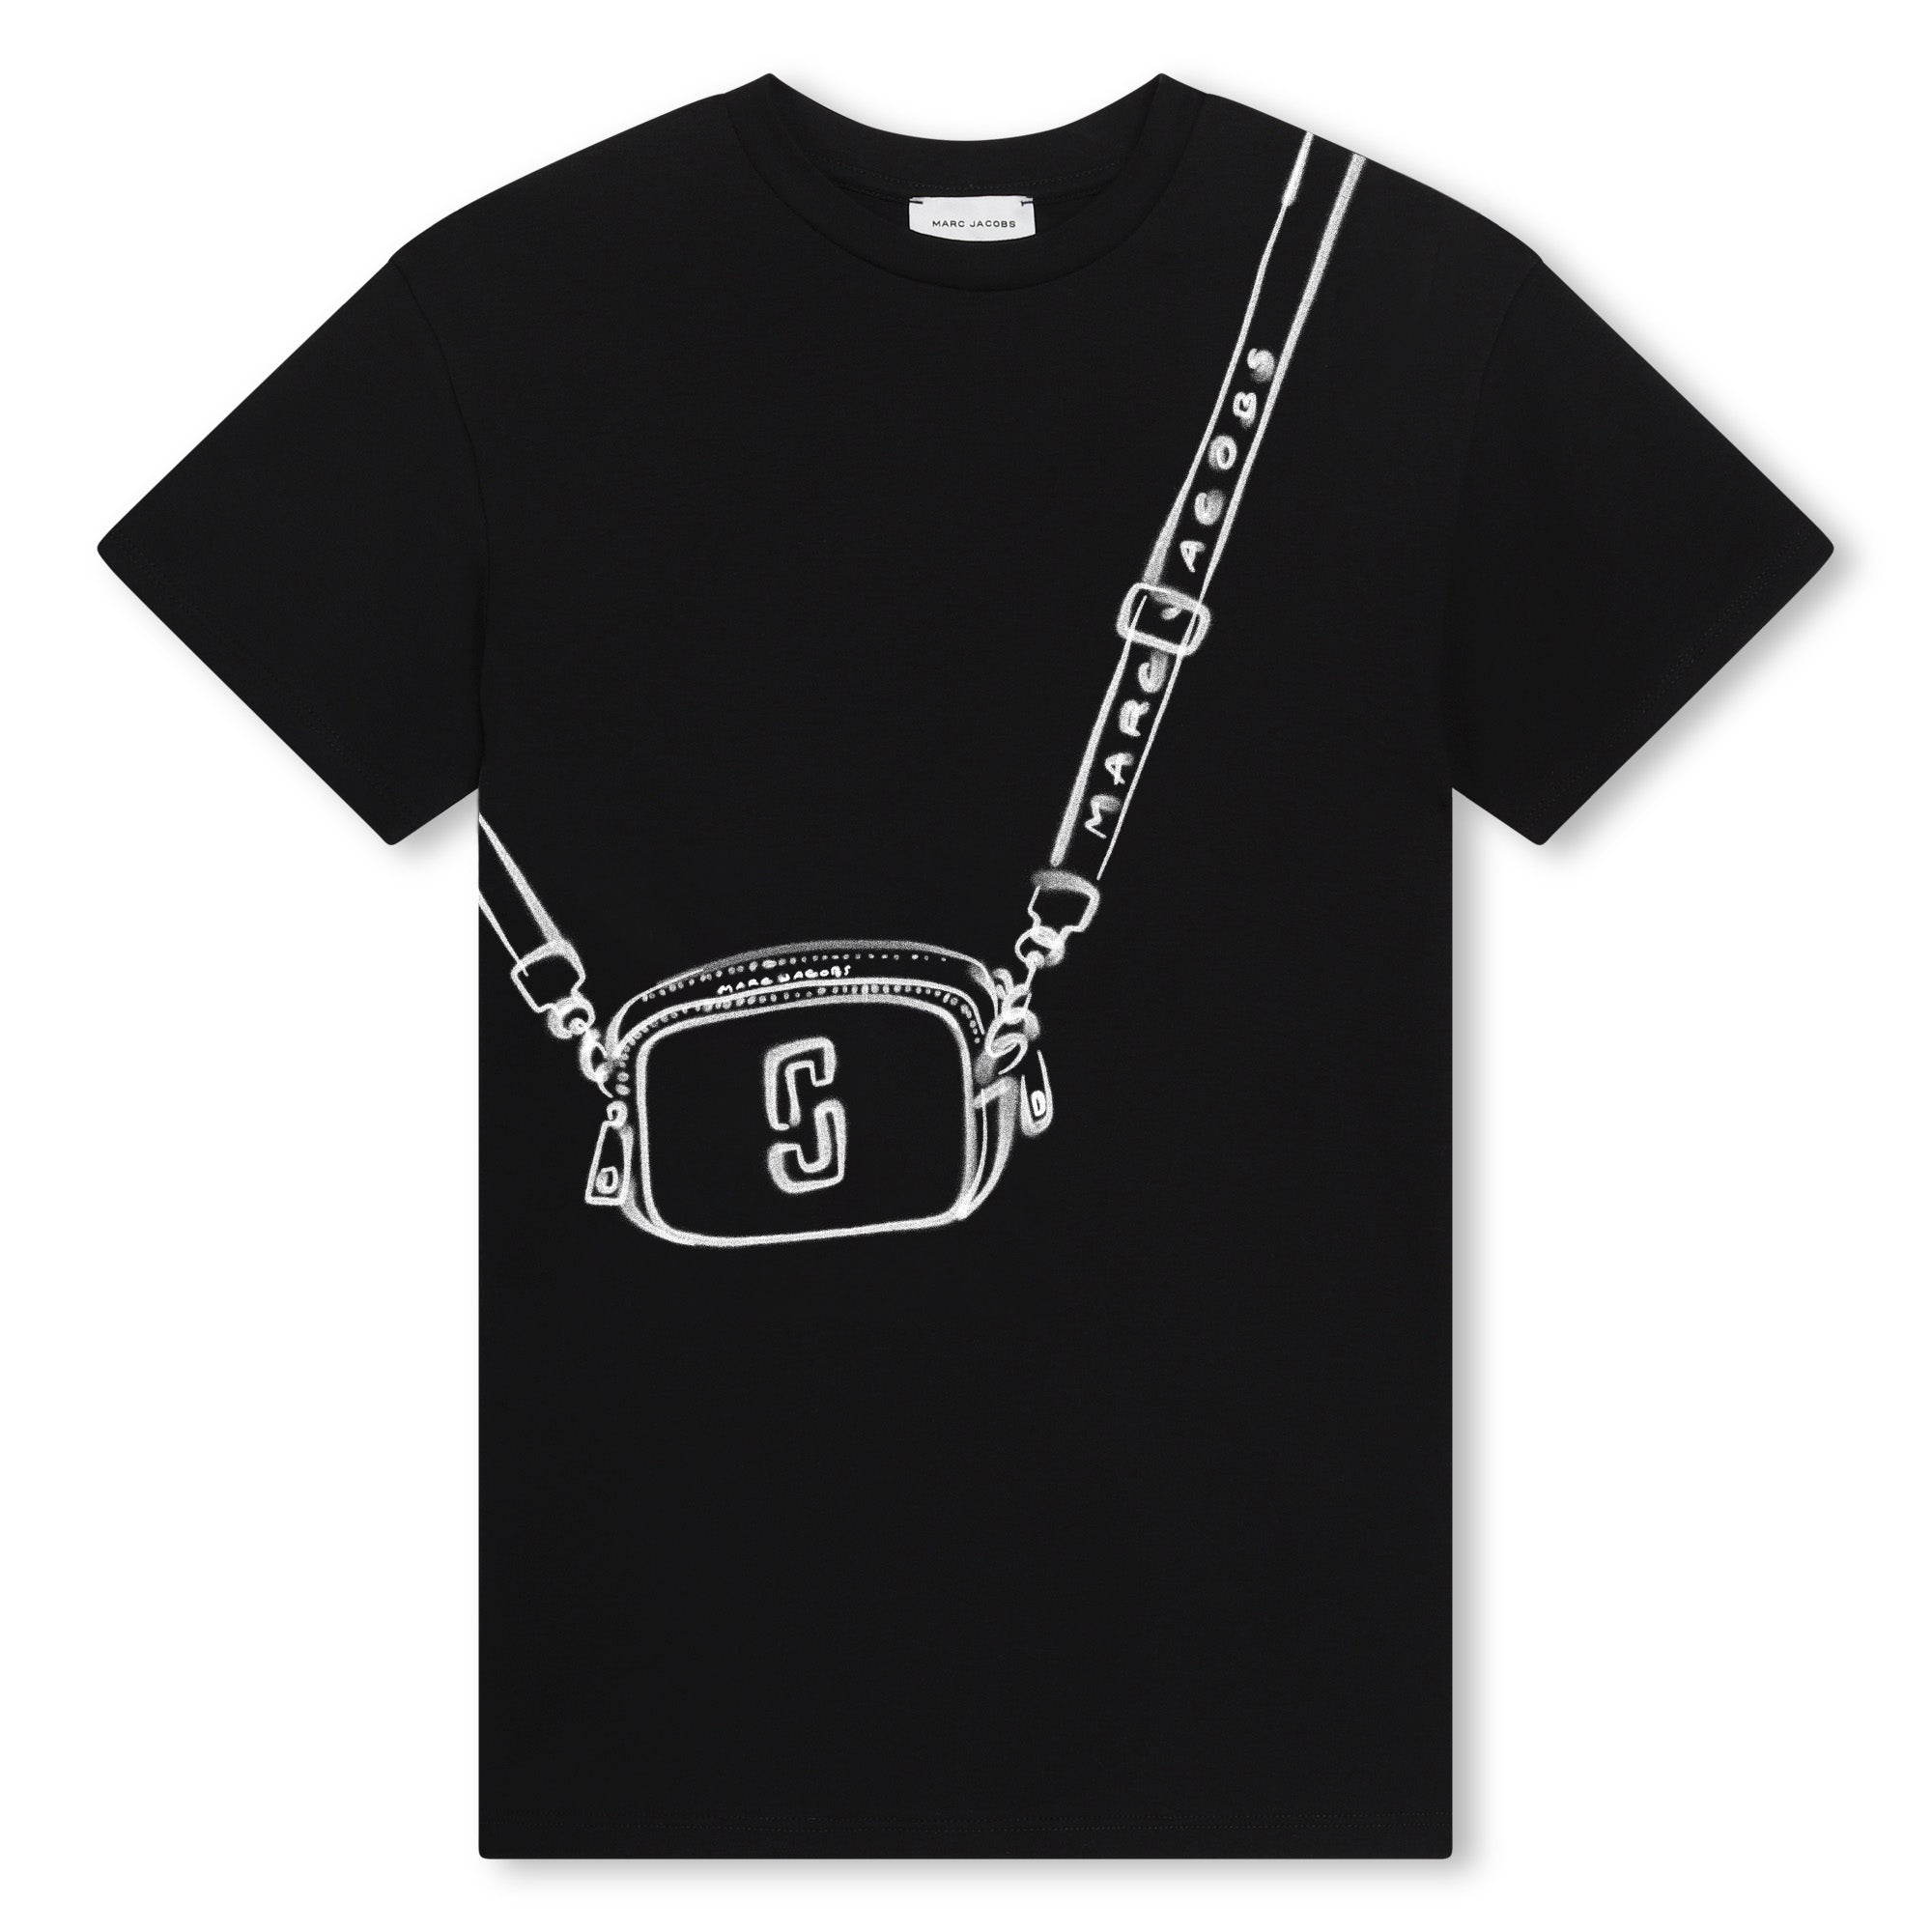 Marc Jacobs Black Snapshot T-Shirt Dress